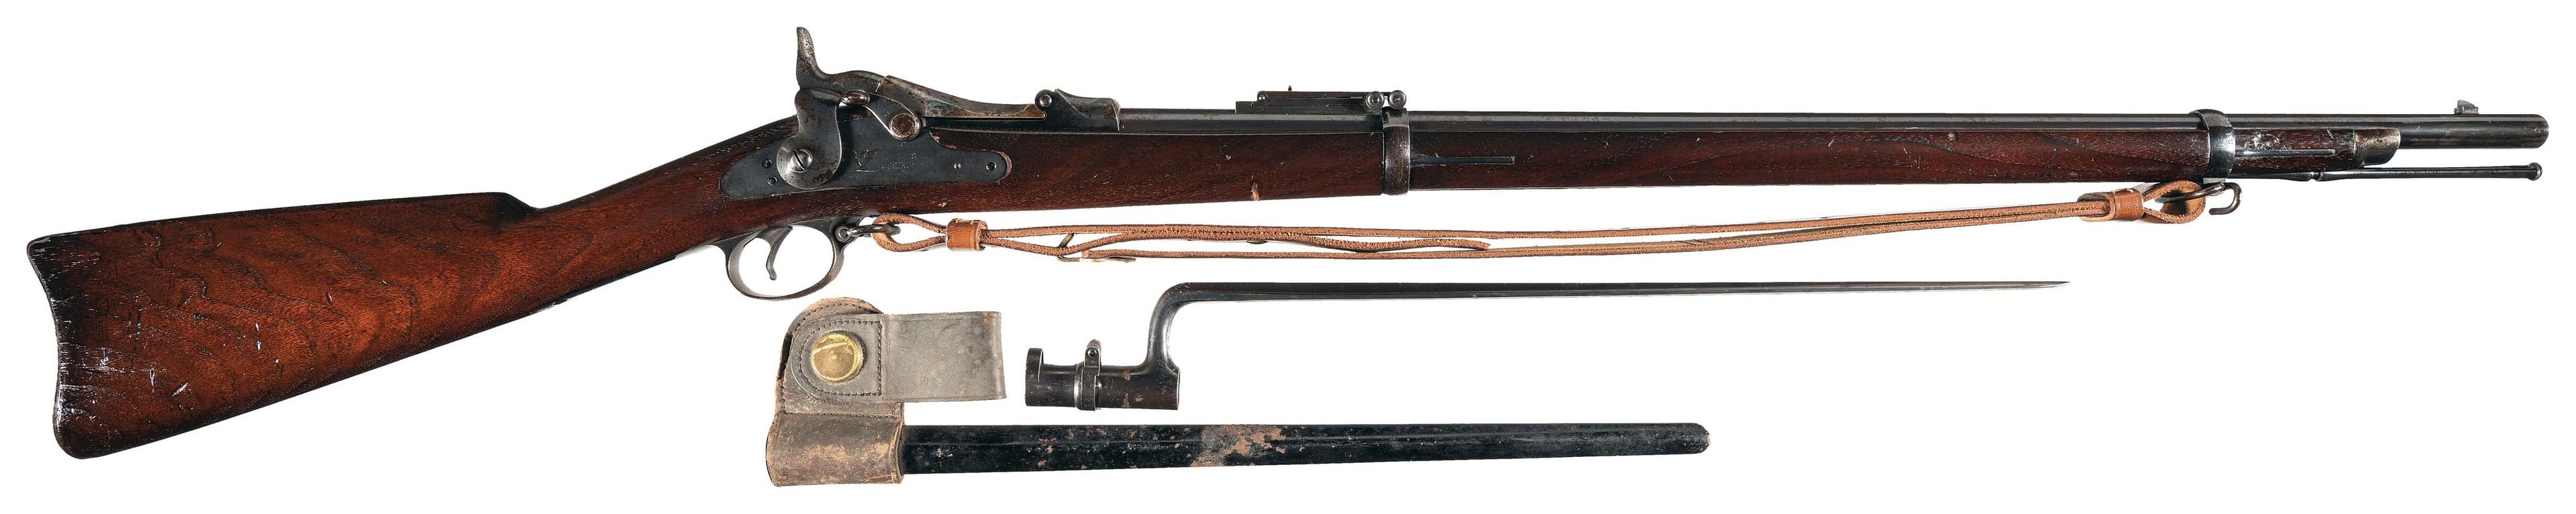 U.S. Springfield 1884 Trapdoor Cadet Rifle with Bayonet